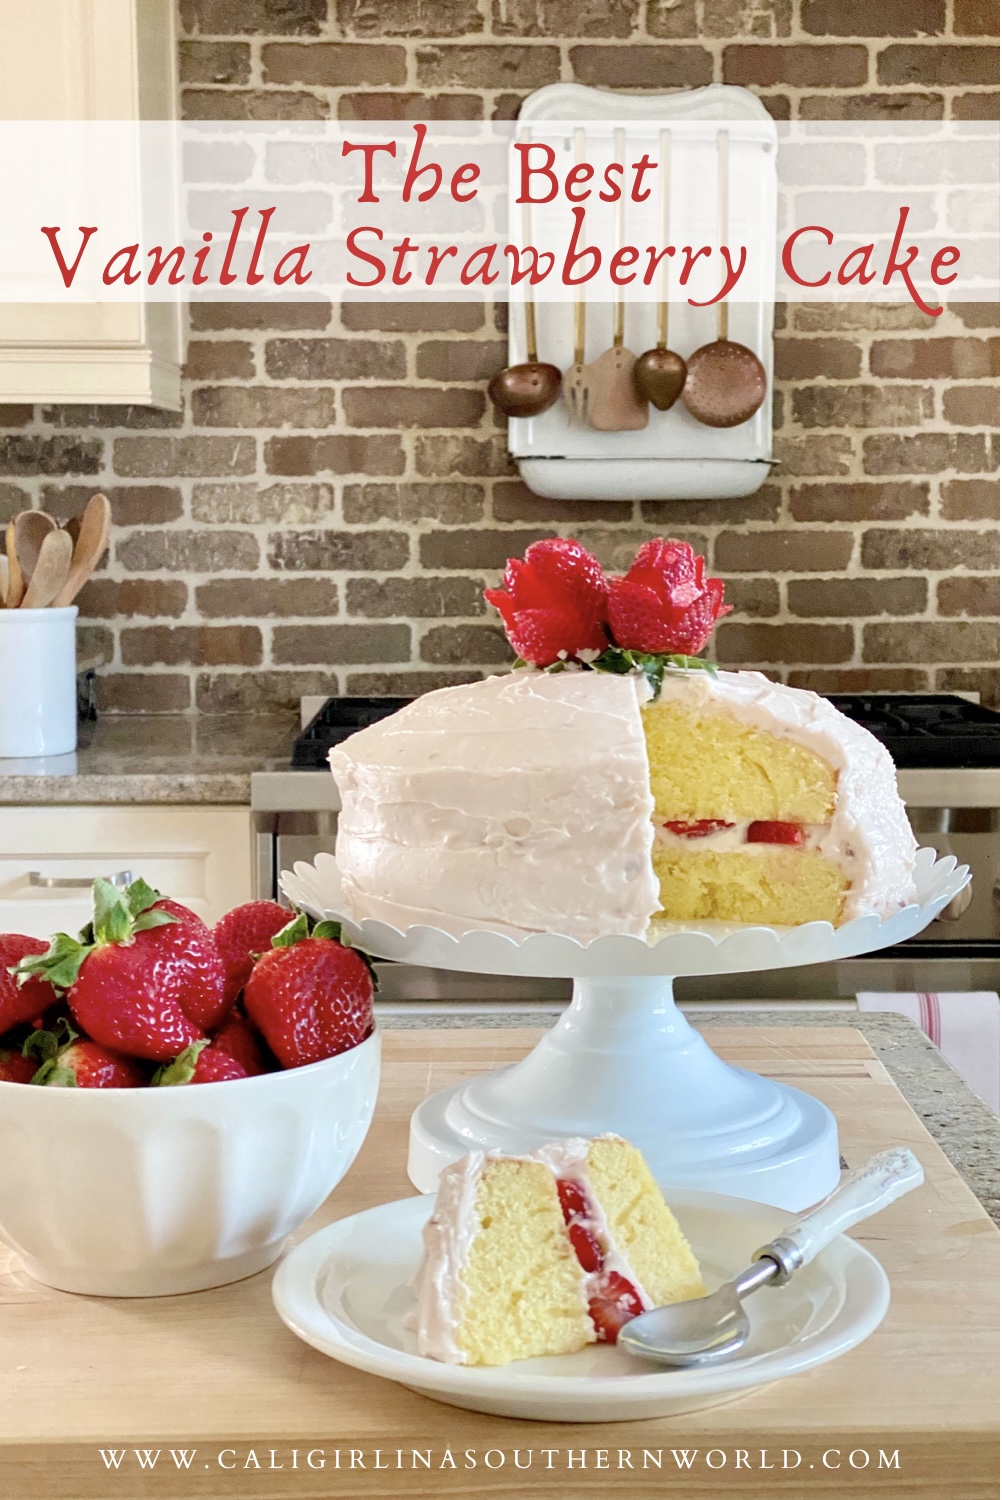 Pinterest Pin for the best vanilla strawberry cake.